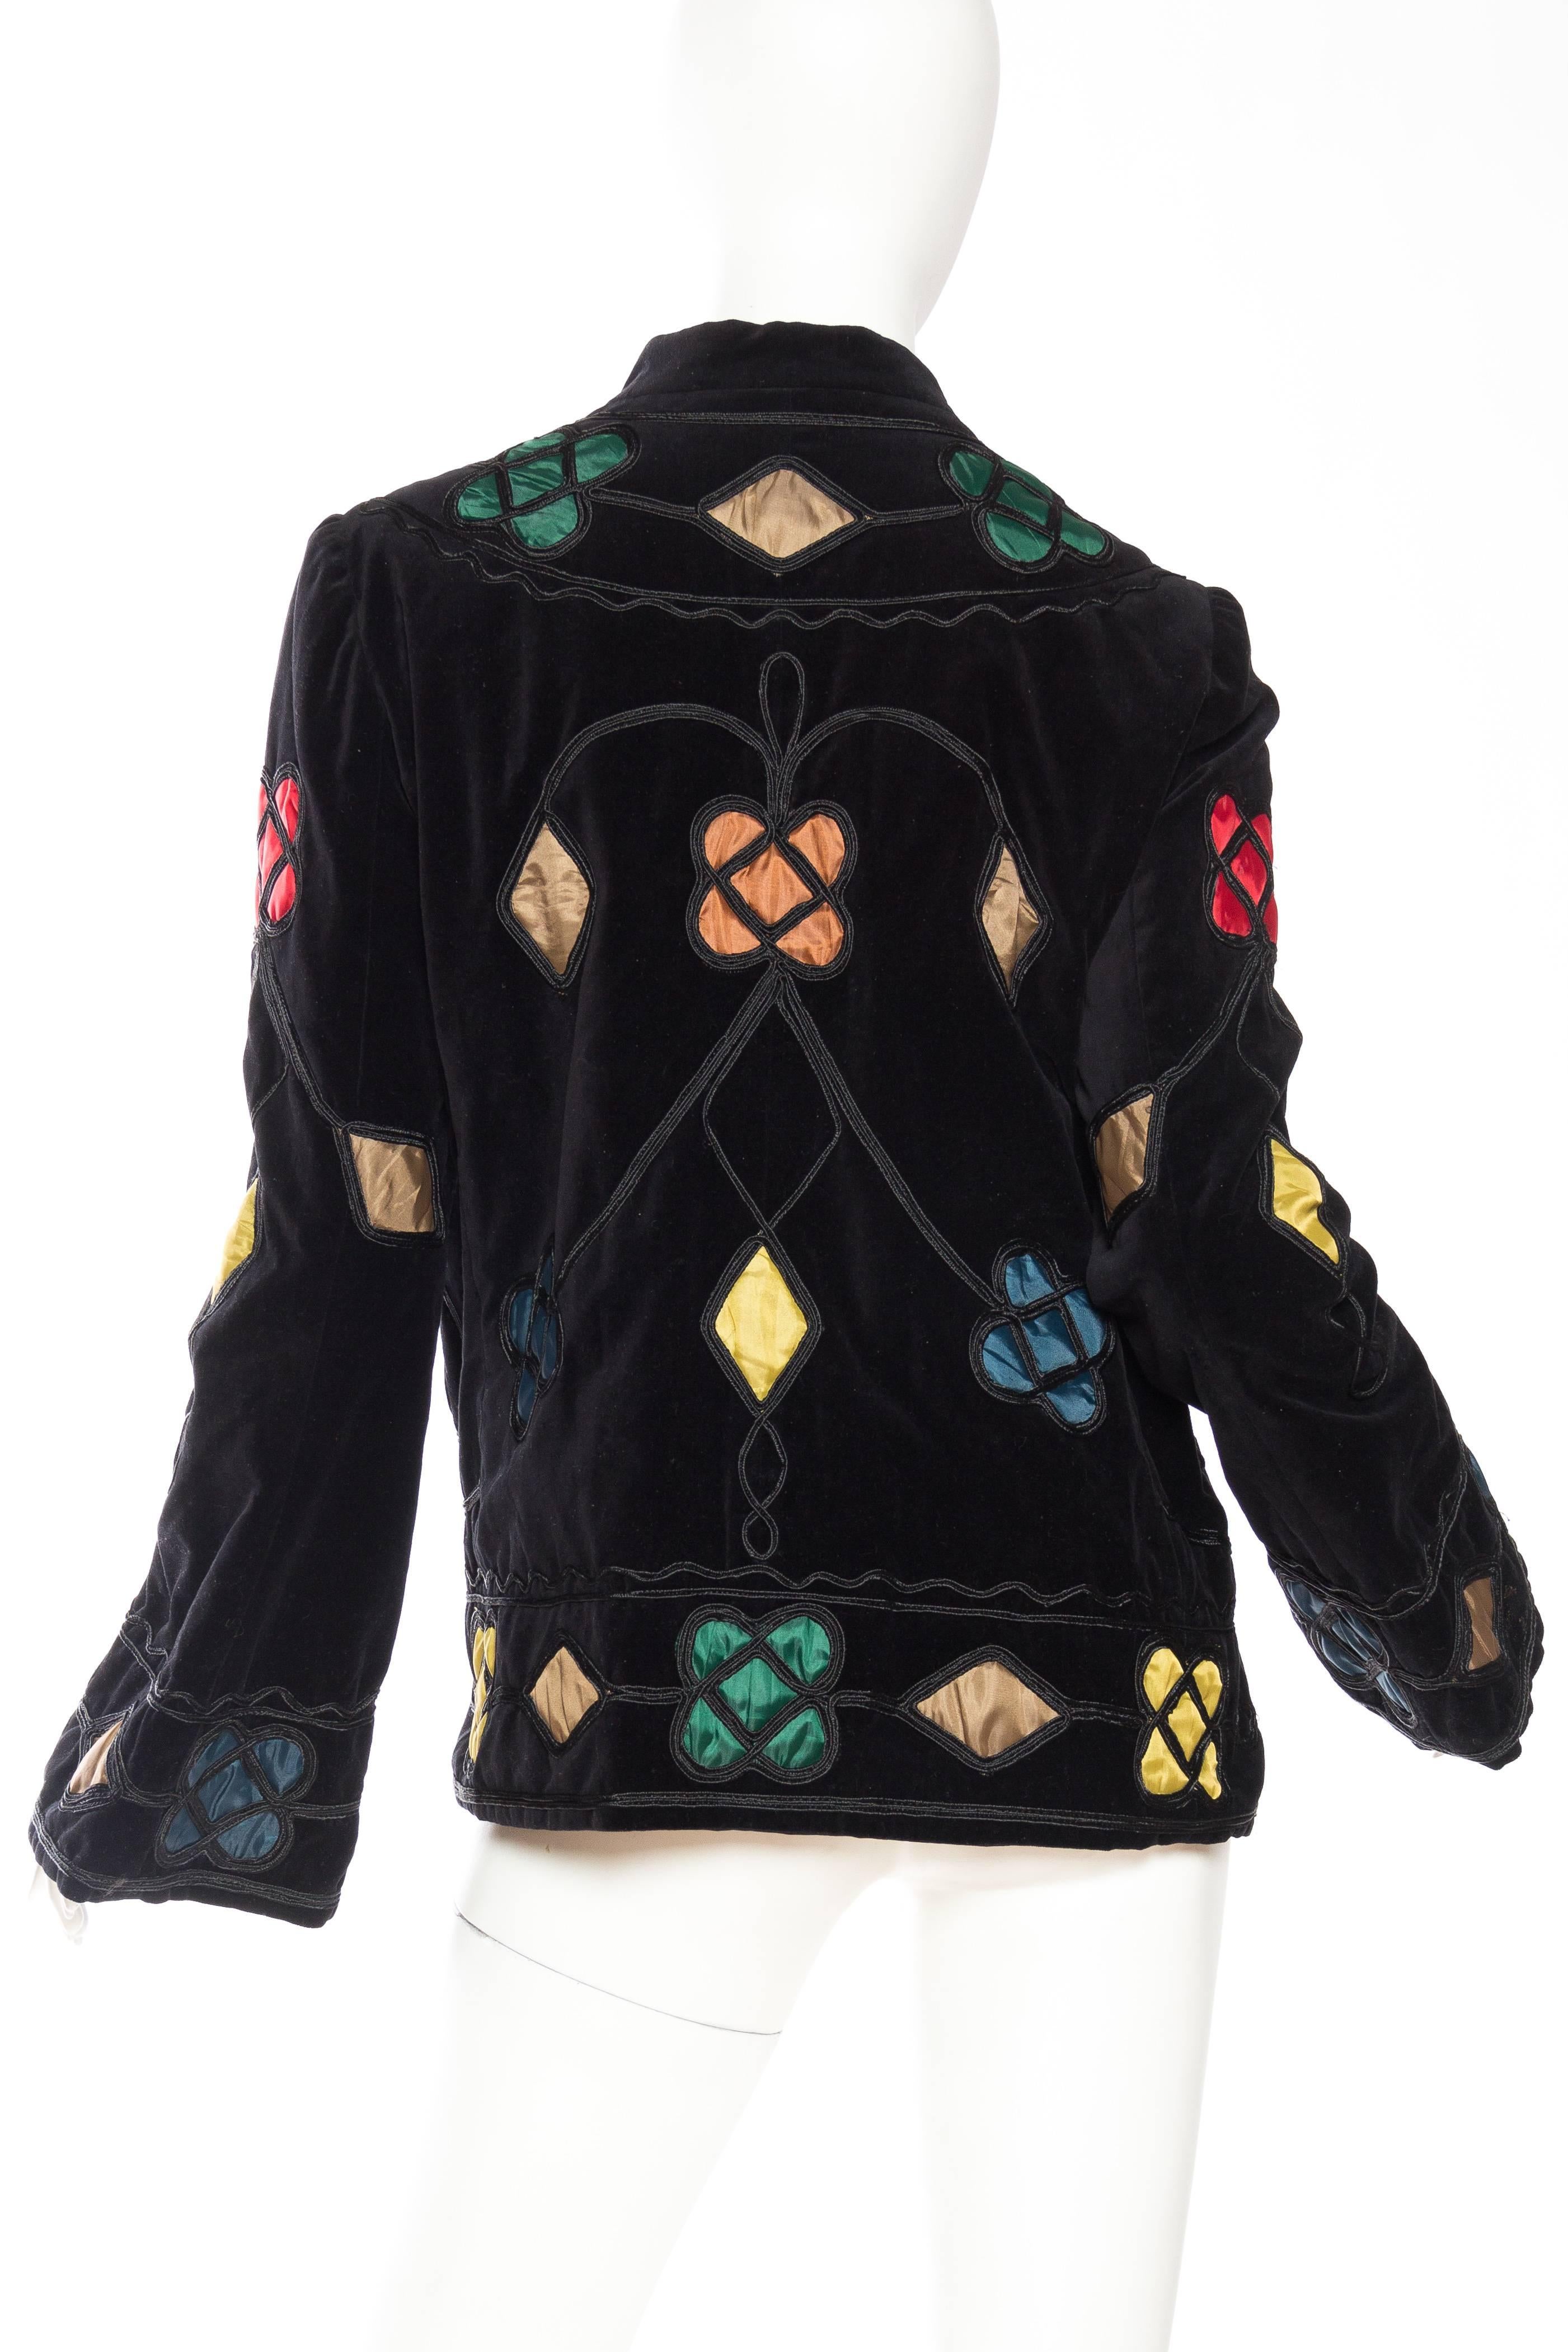 Bohemian Style Velvet Jacket by Armani 2